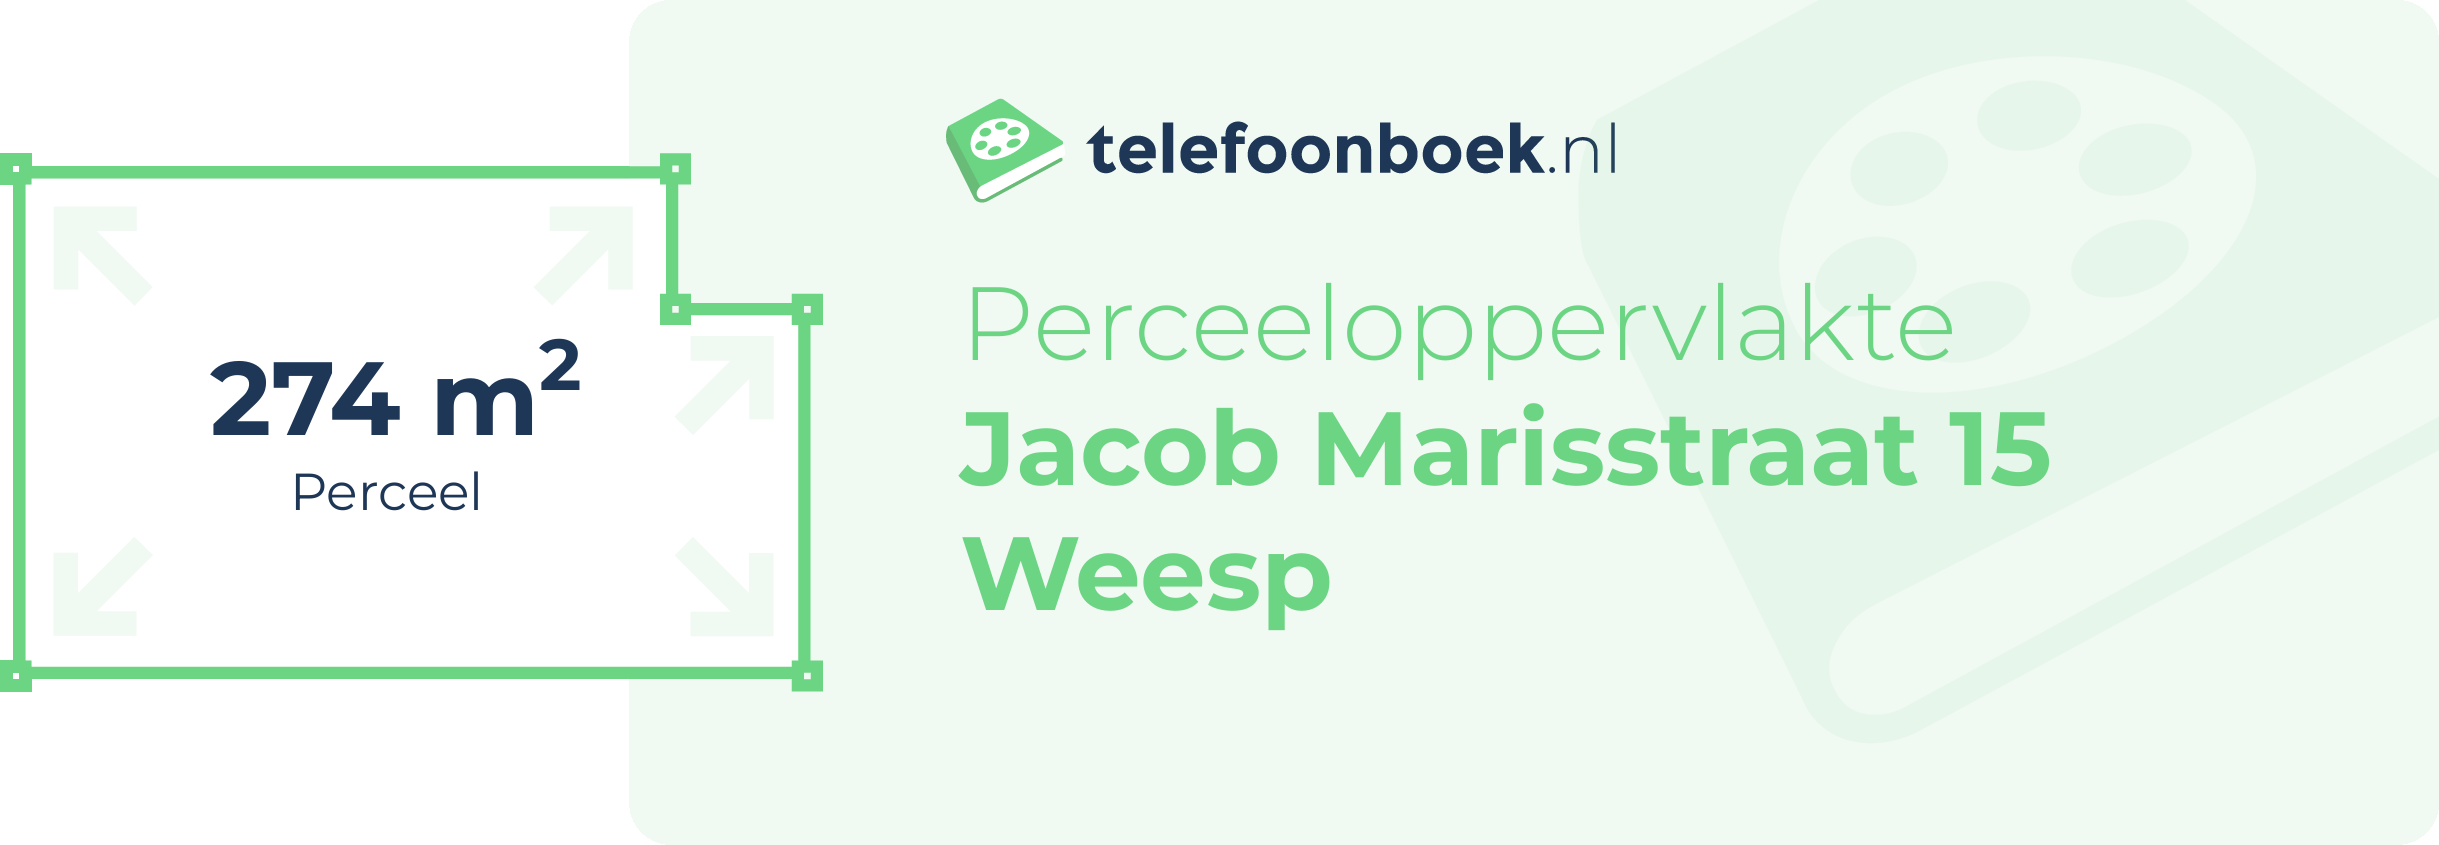 Perceeloppervlakte Jacob Marisstraat 15 Weesp